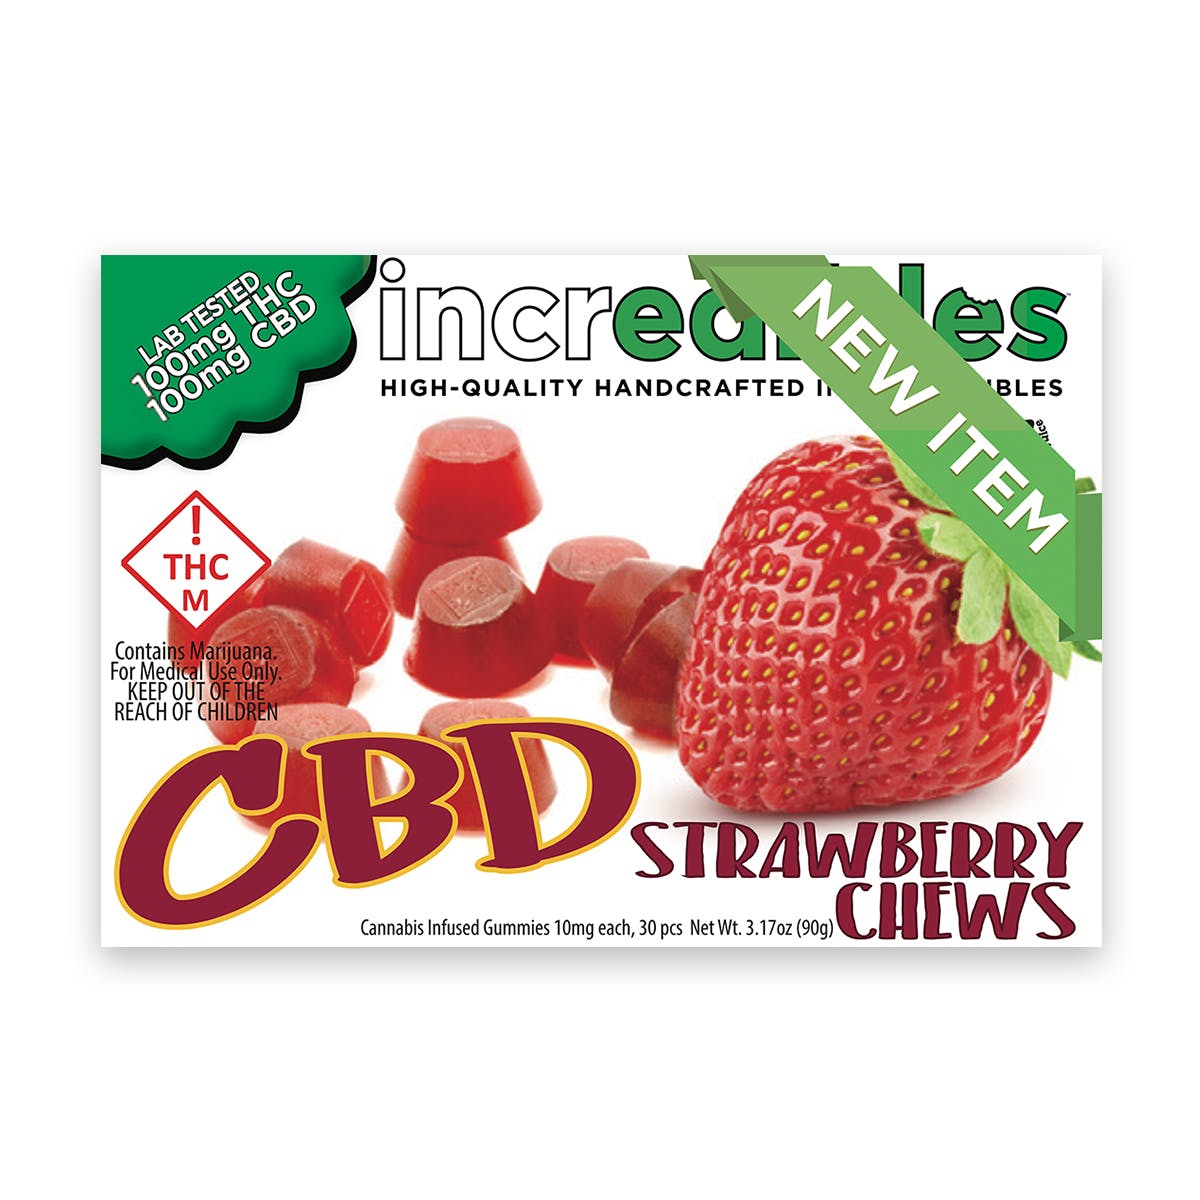 marijuana-dispensaries-m-and-m-distributing-in-trinidad-cbd-strawberry-chews-2c-100mg-11-thccbd-rec